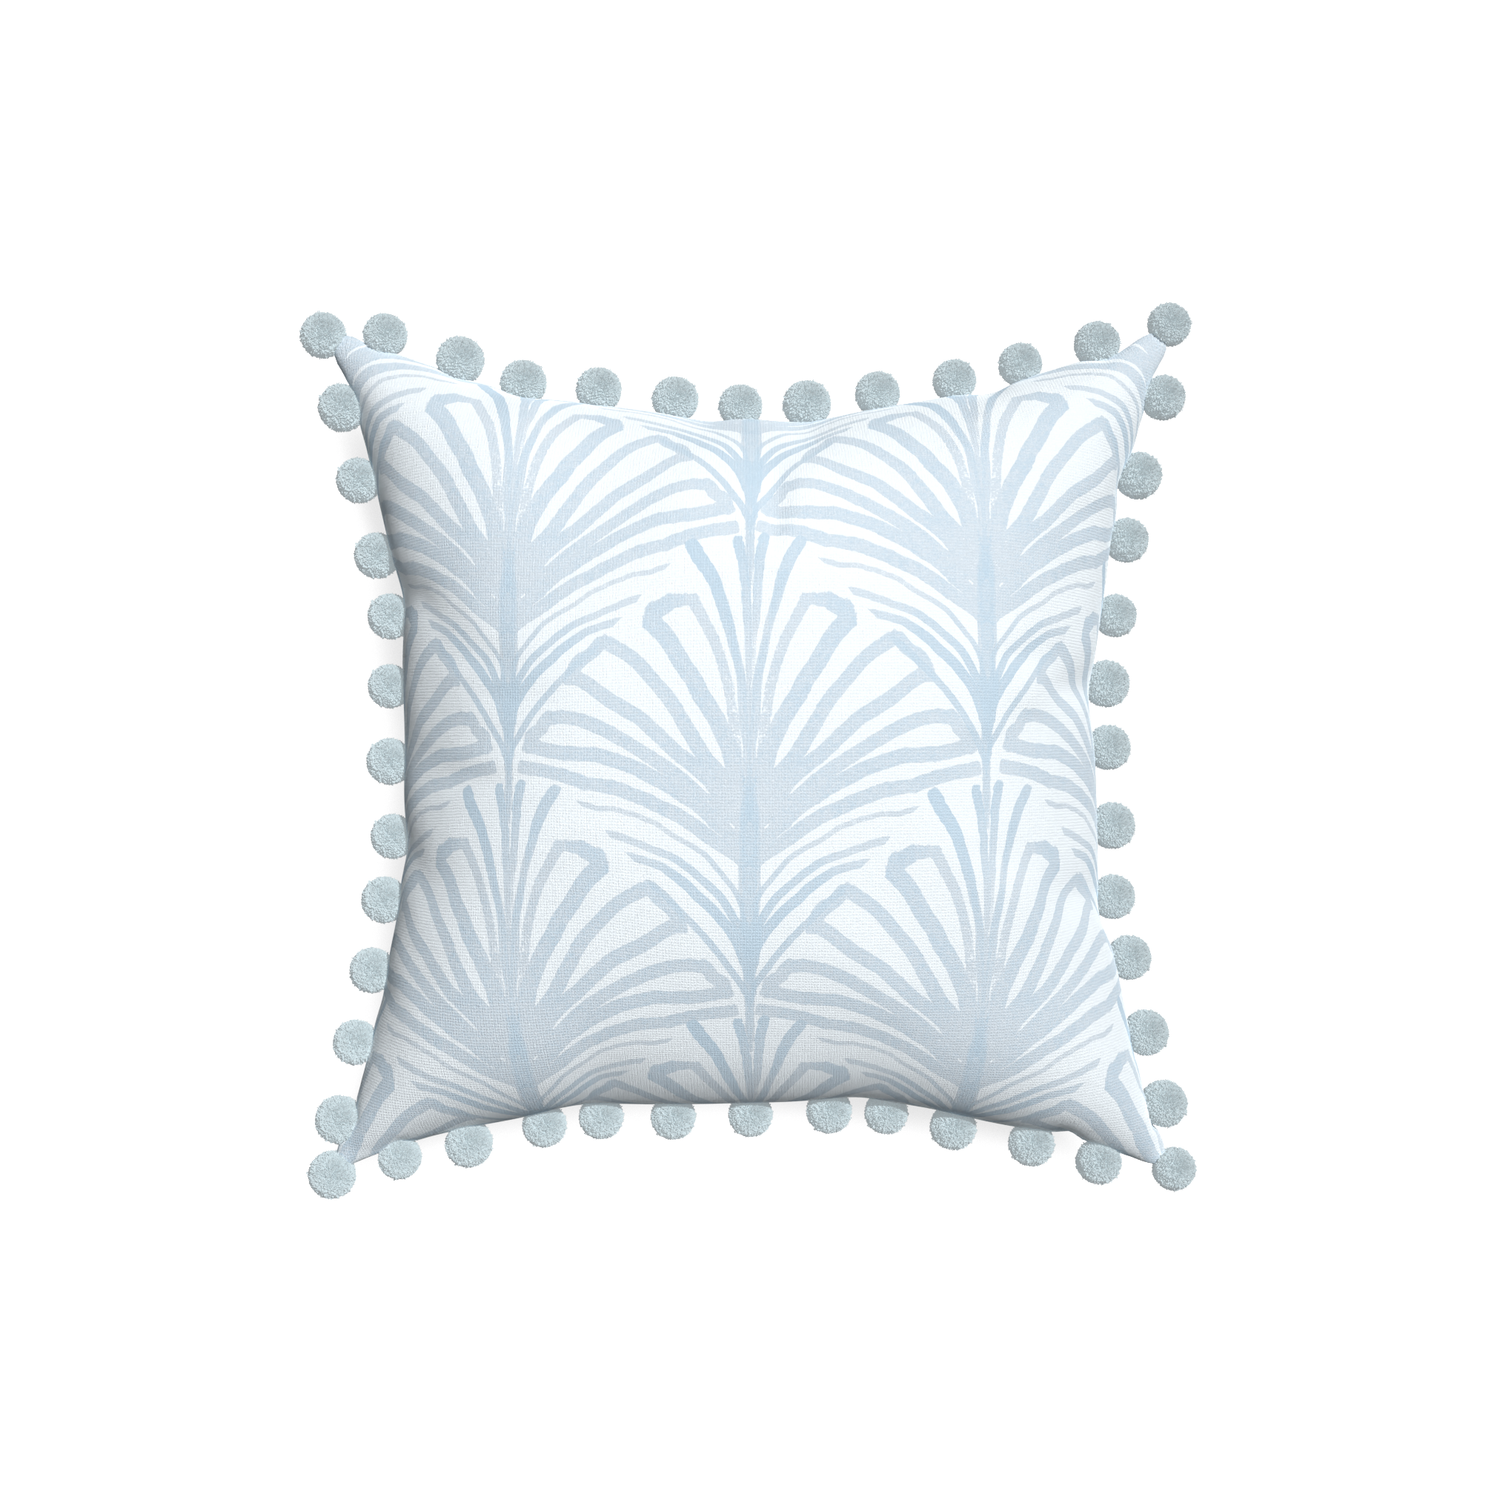 18-square suzy sky custom pillow with powder pom pom on white background